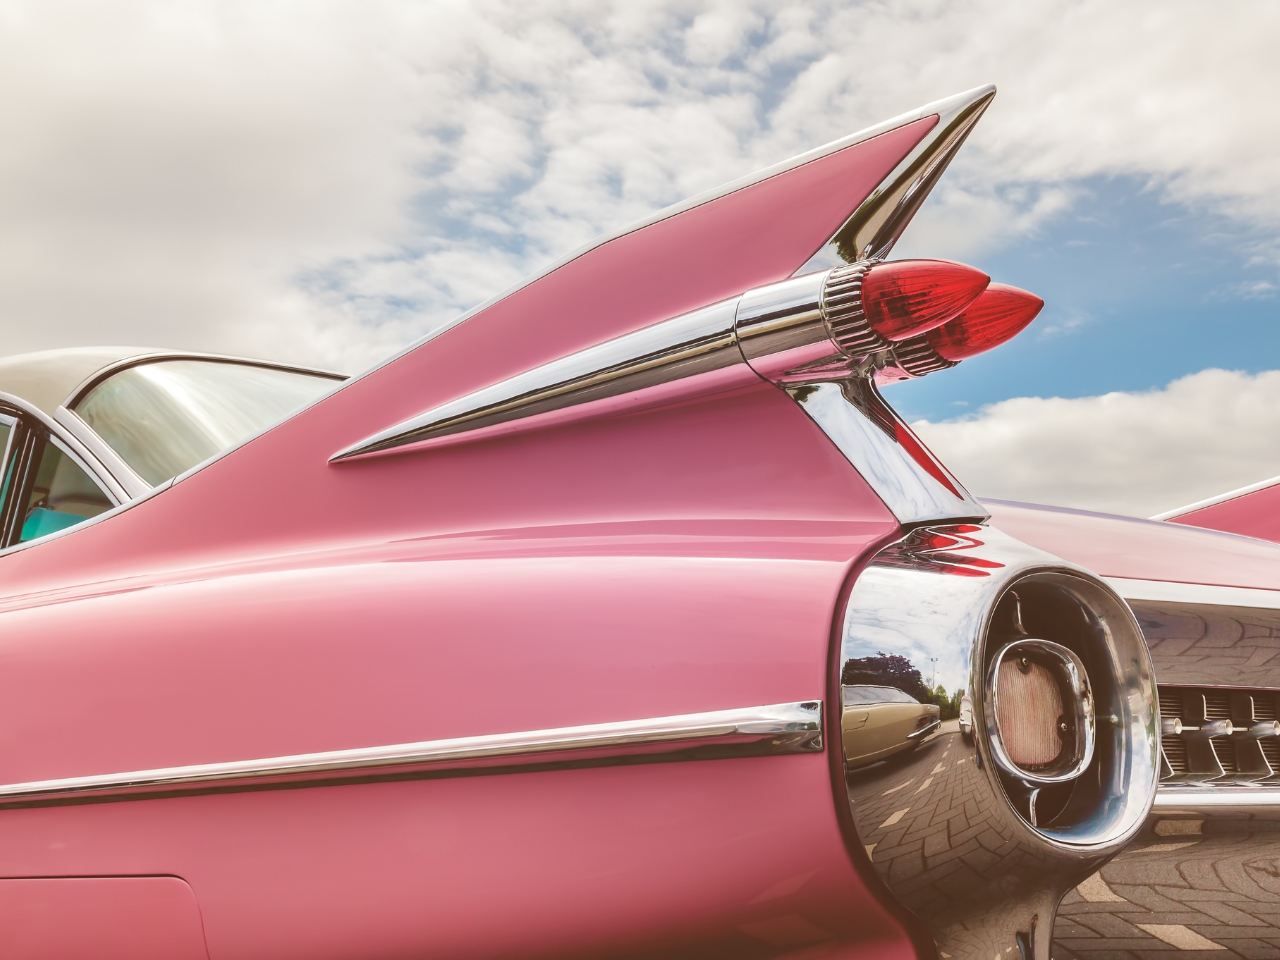 Rear-end of a pink vintage car